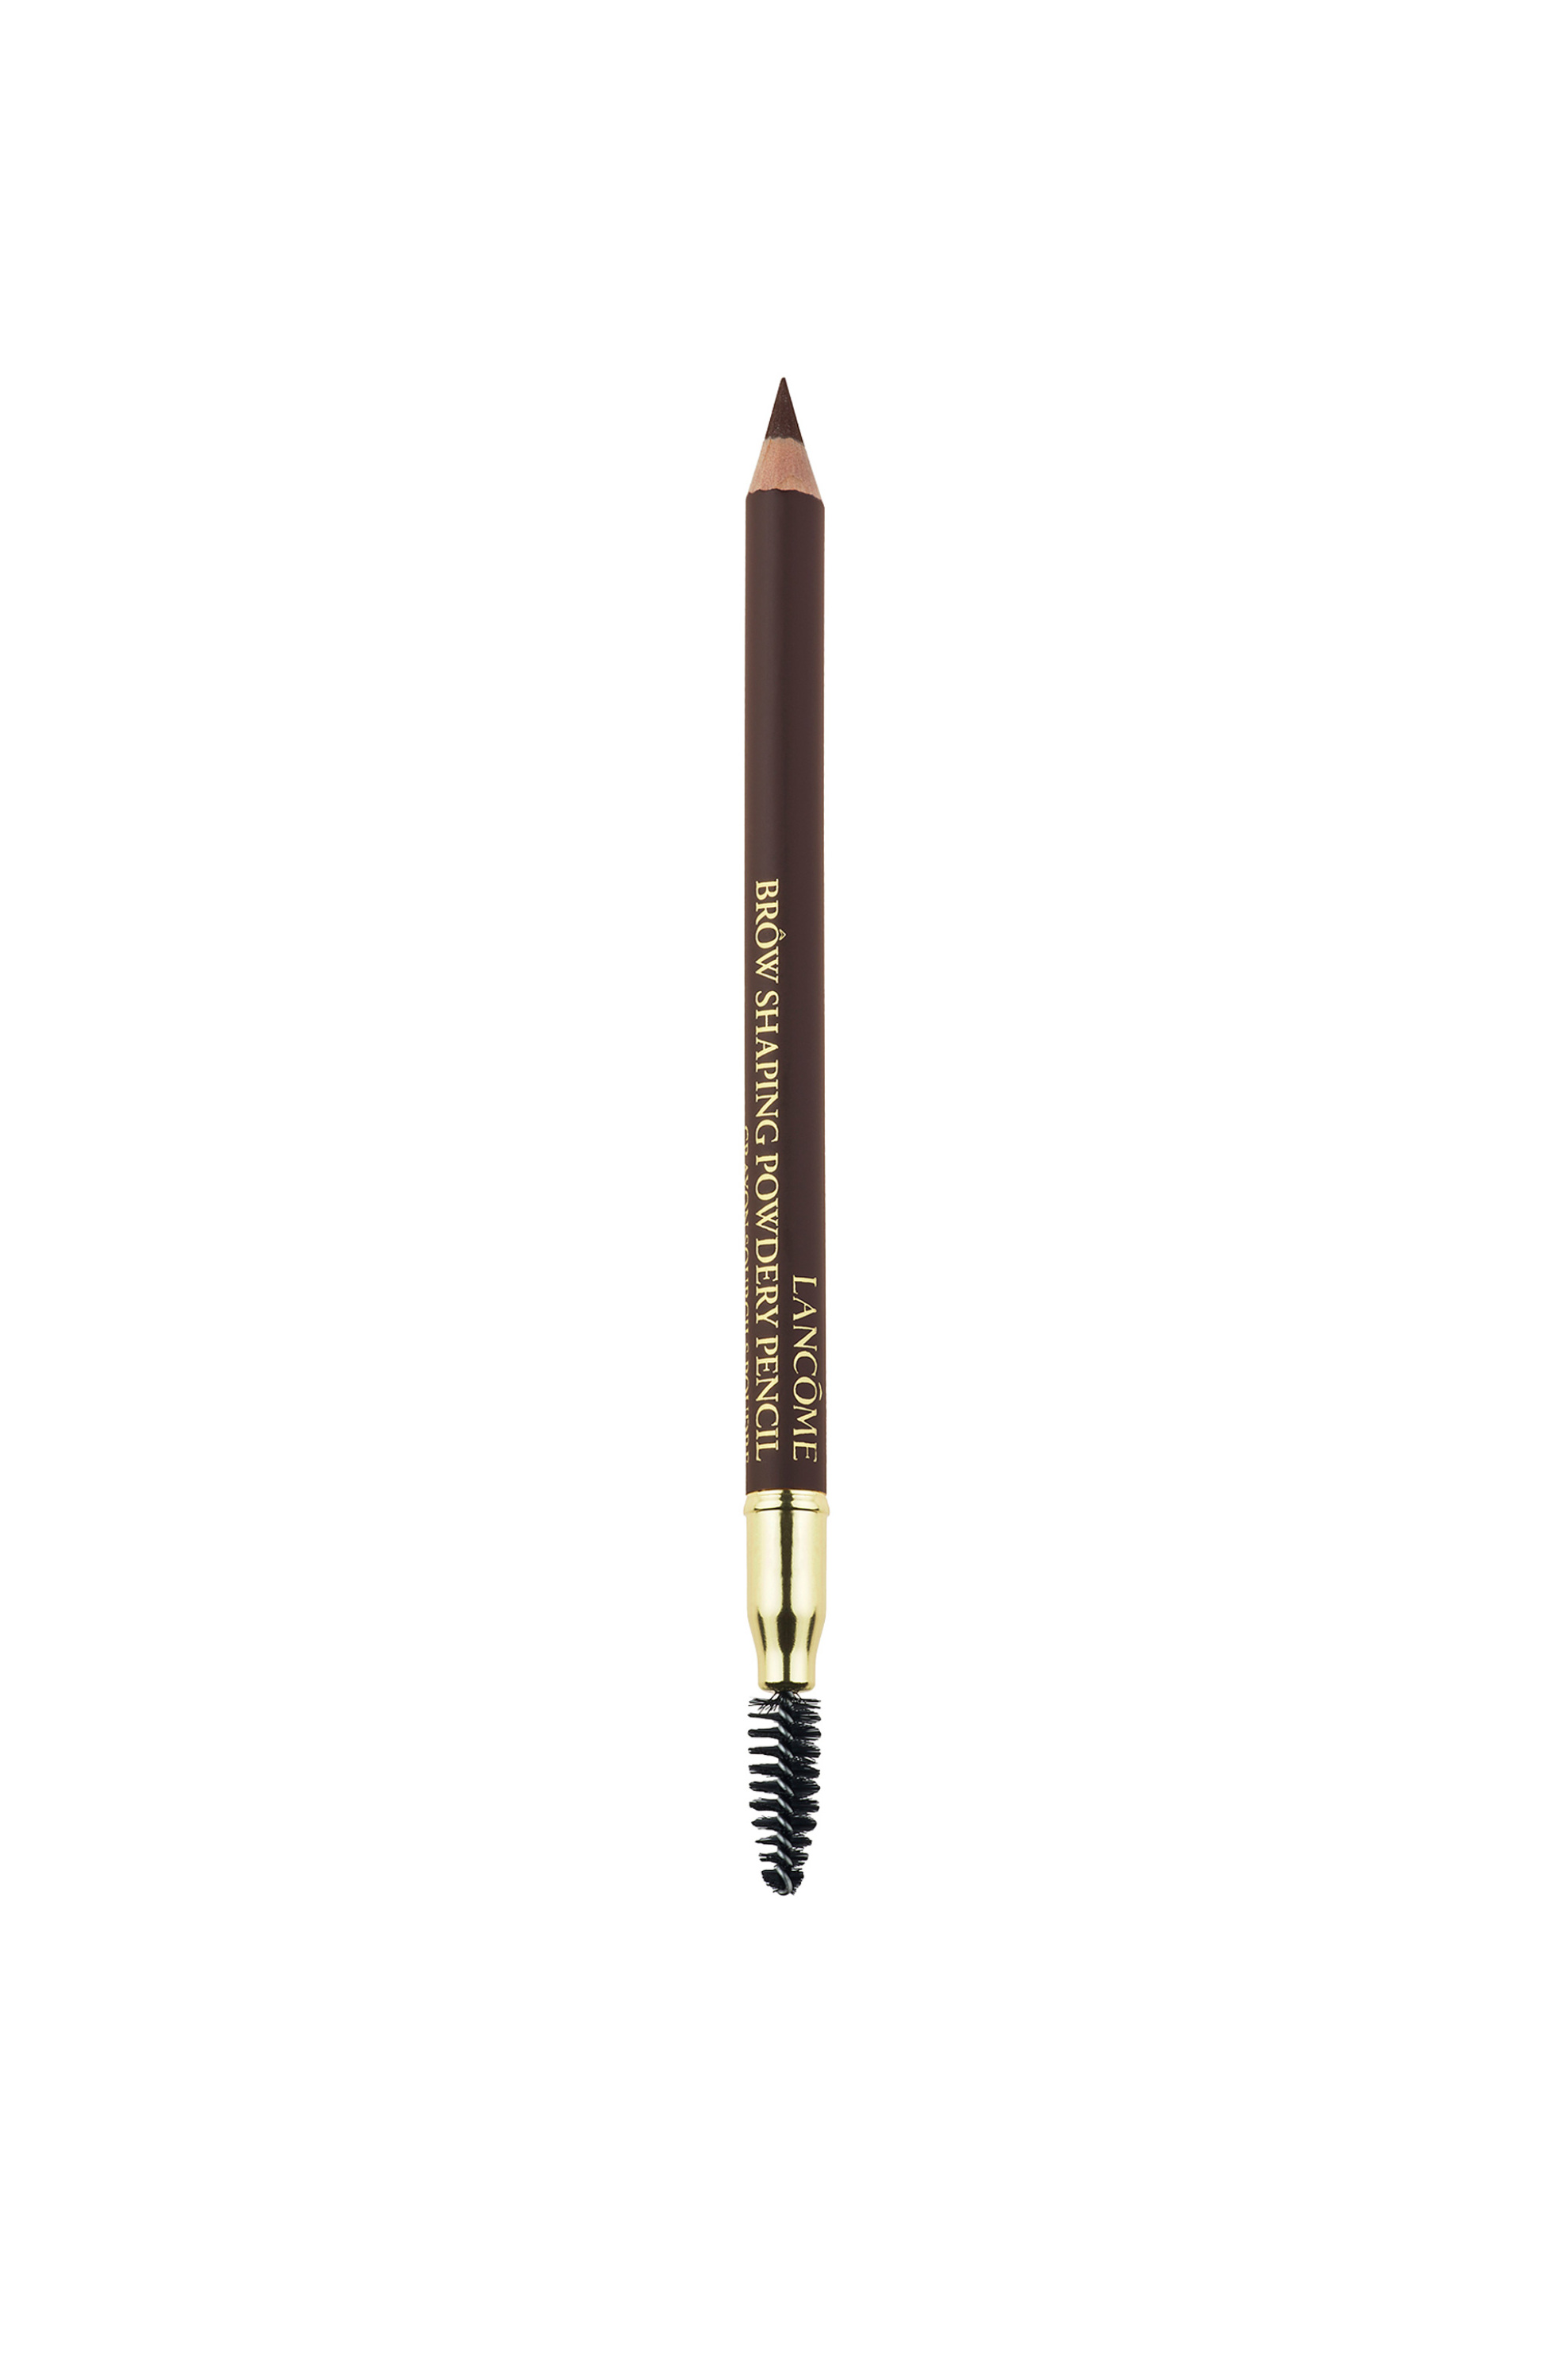 Lancôme Brôw Shaping Powdery Pencil - 3614272110212 08 Dark Brown 989278502816